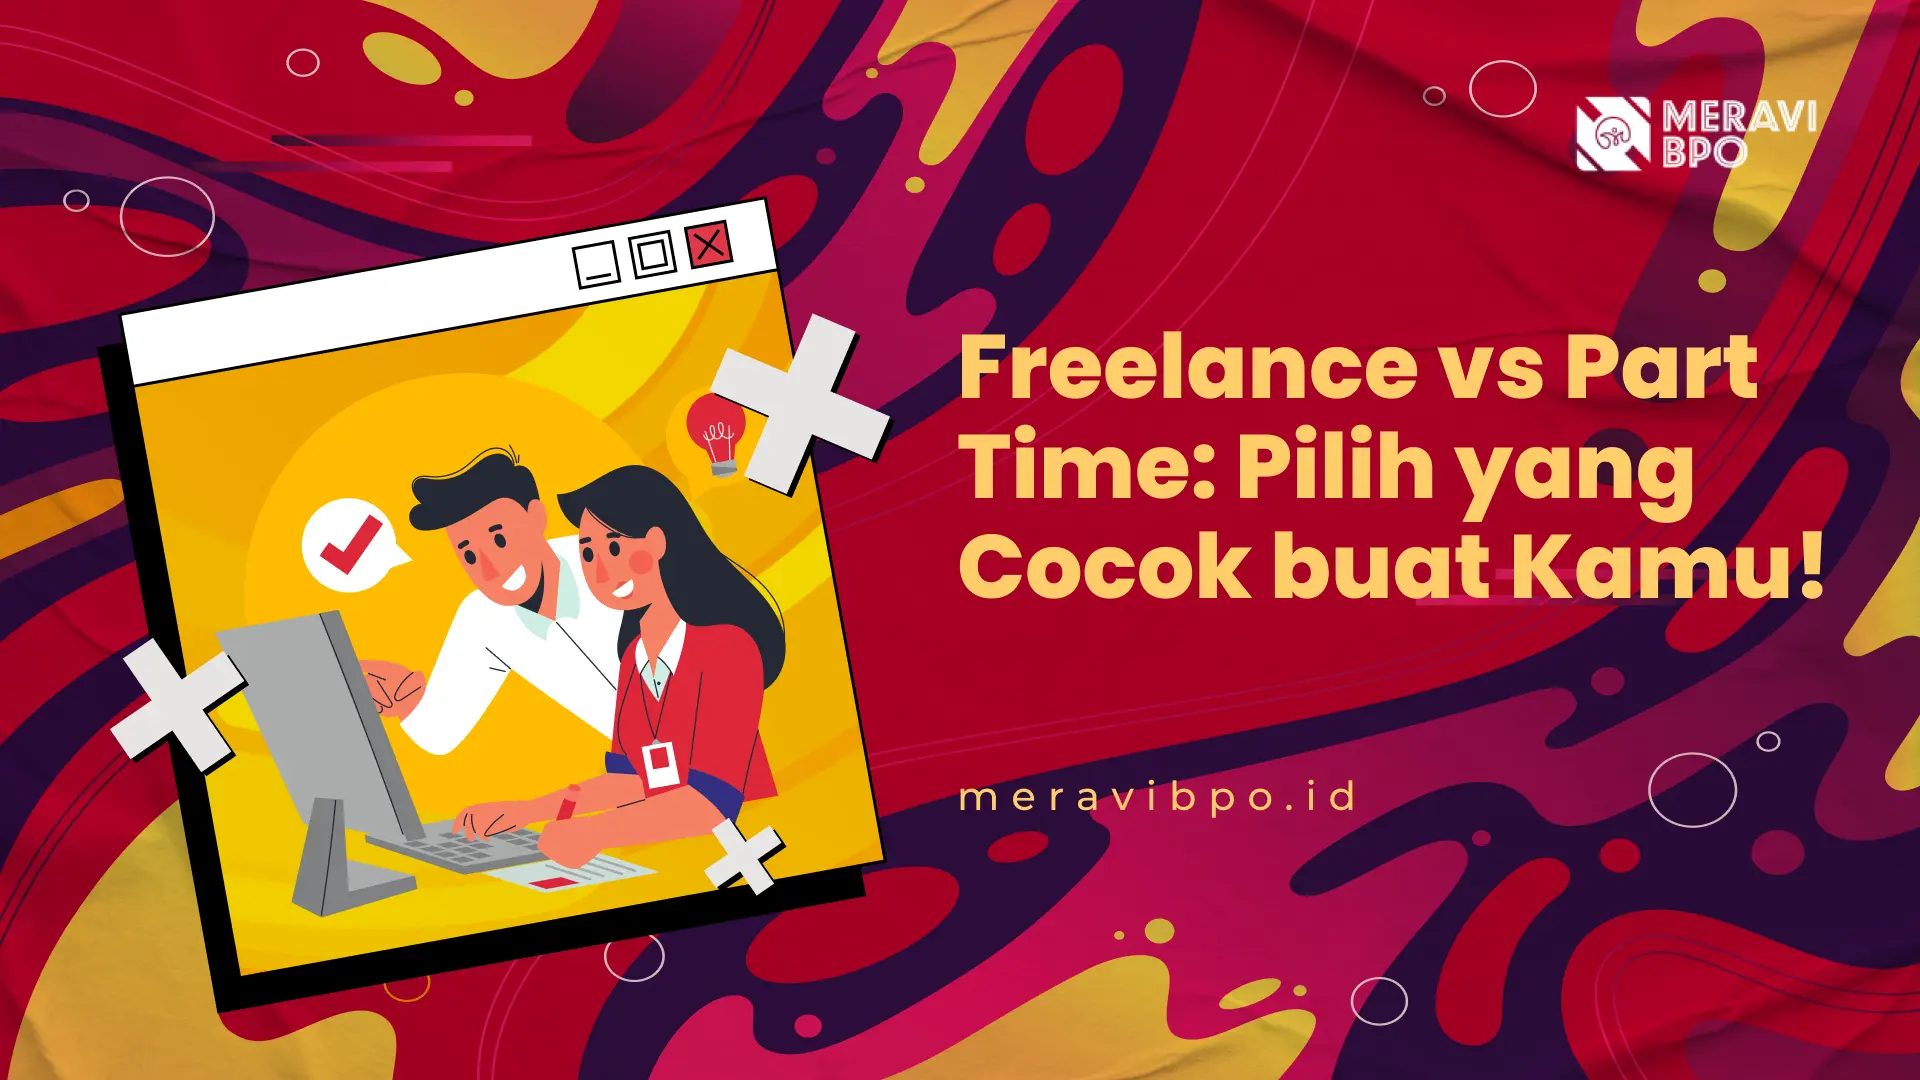 Freelance vs Part Time: Pilih yang Cocok buat Kamu!